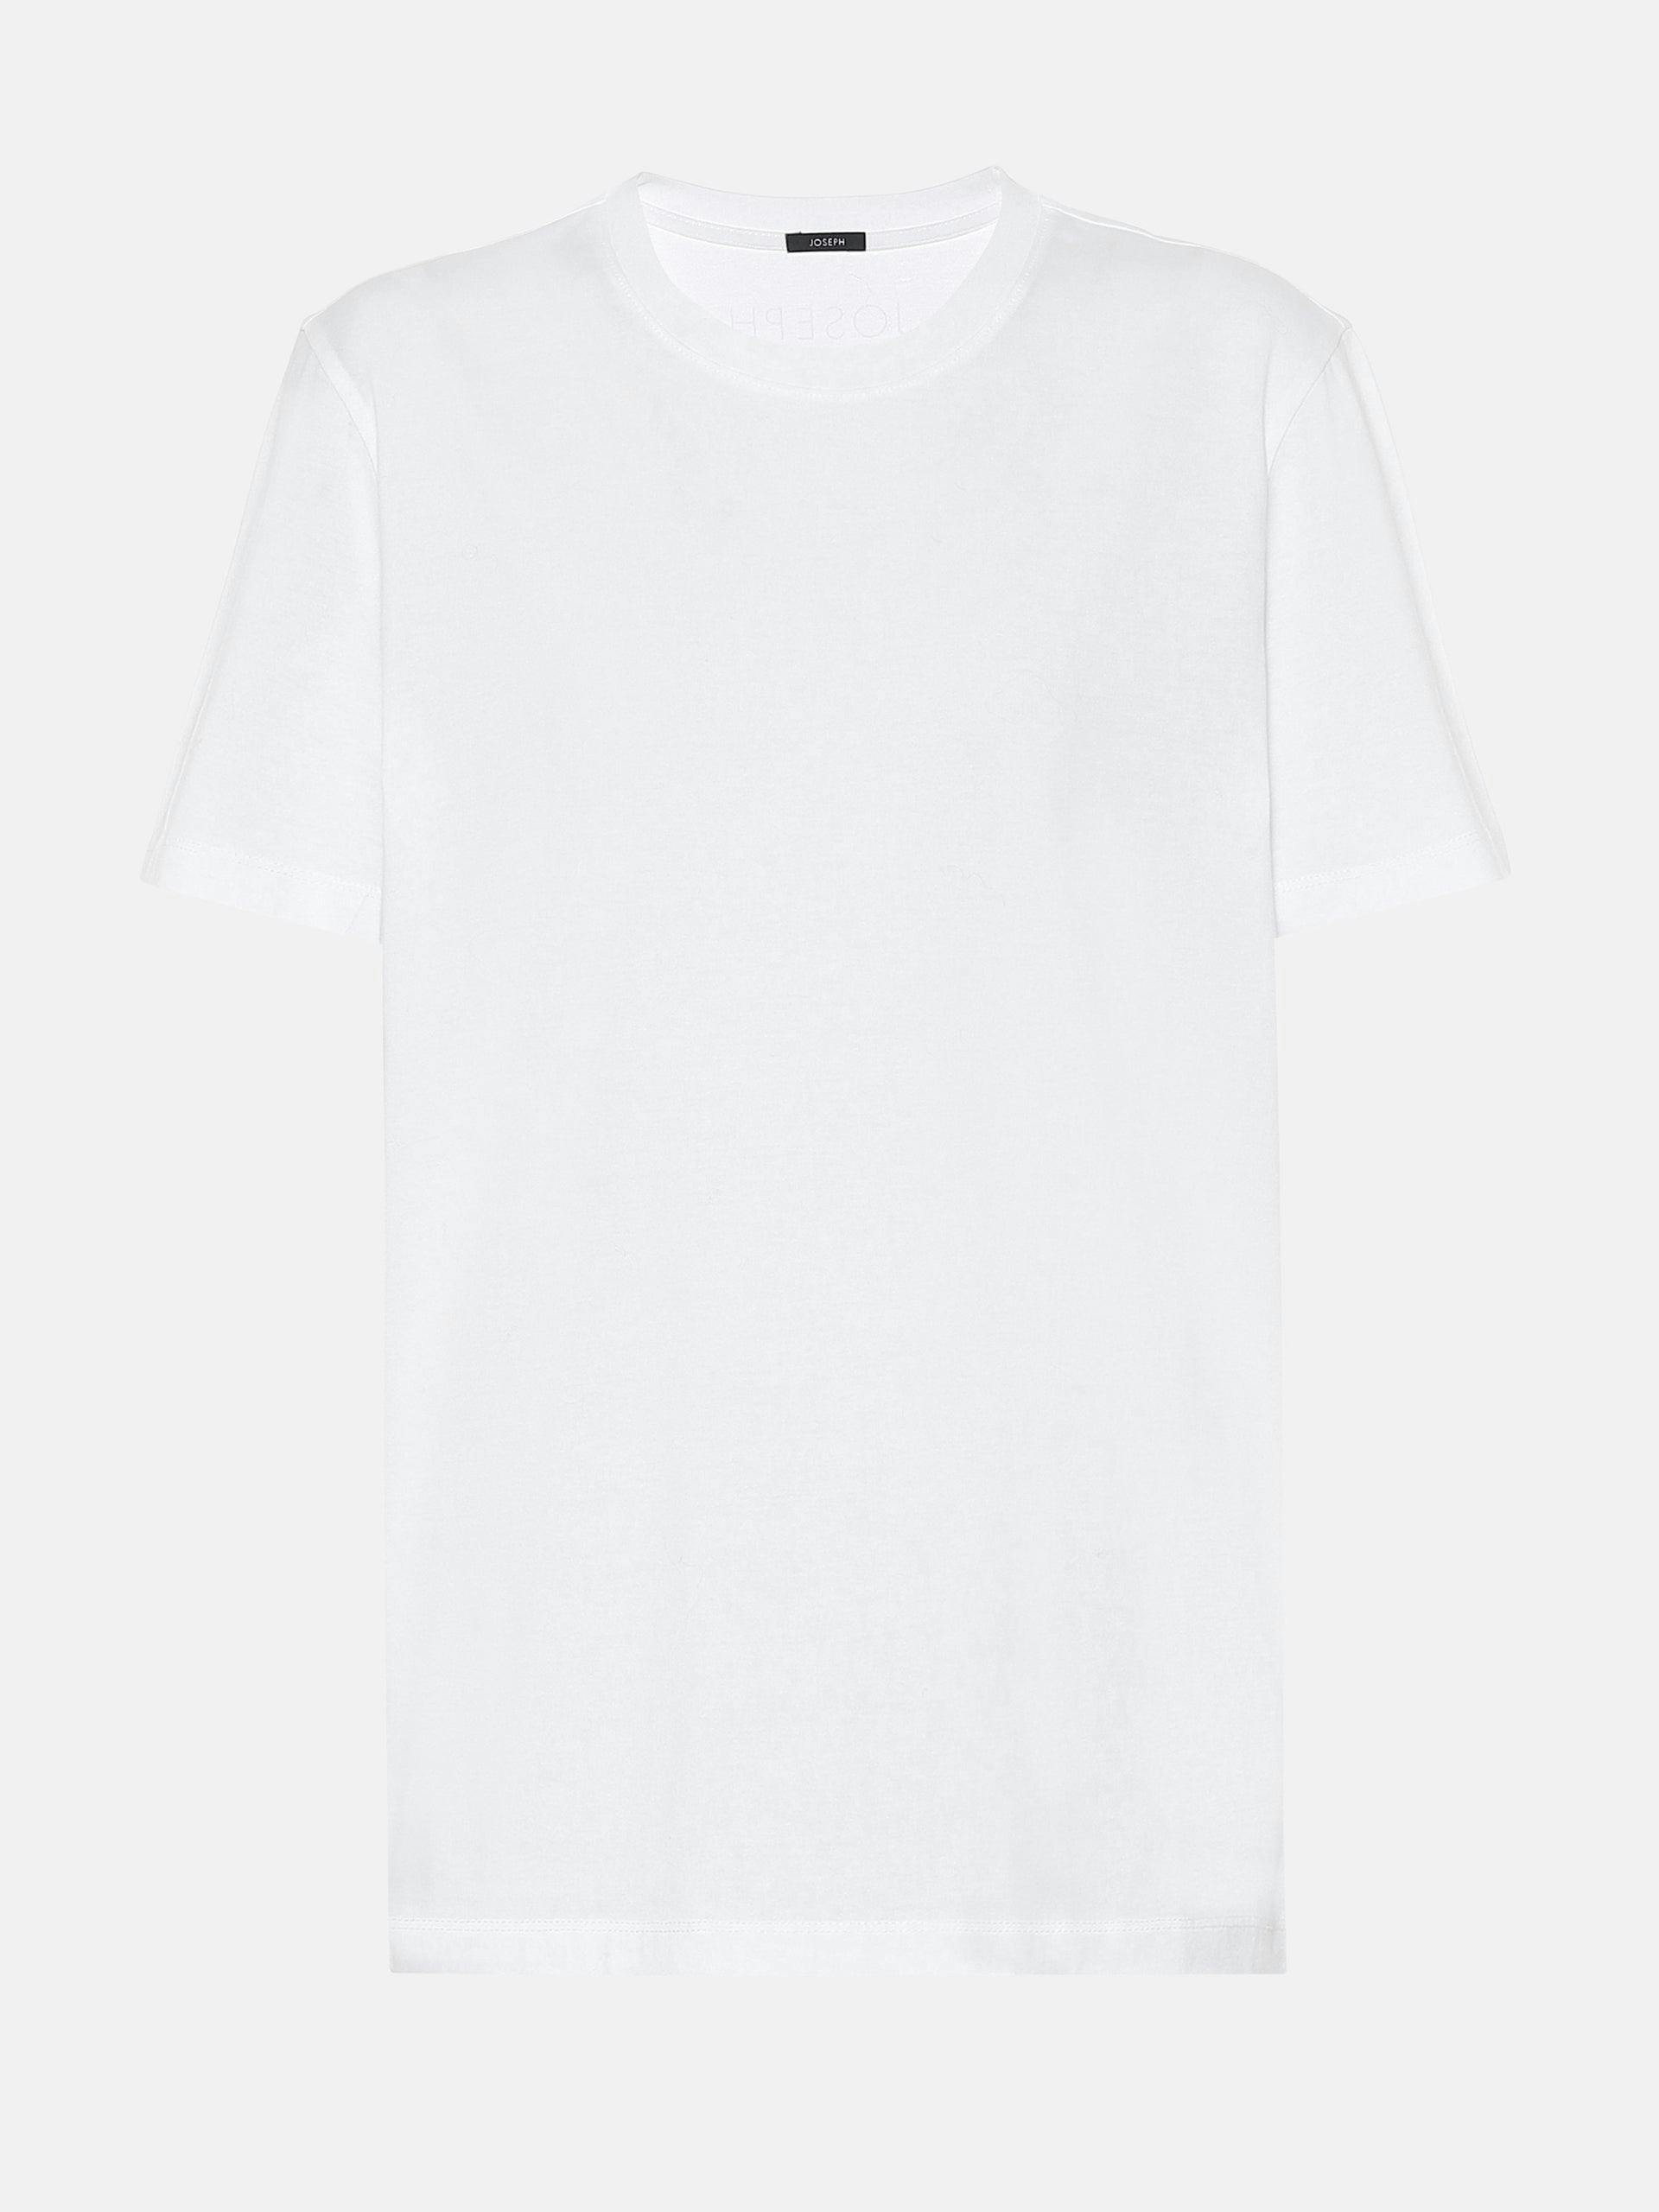 Cotton white t-shirt